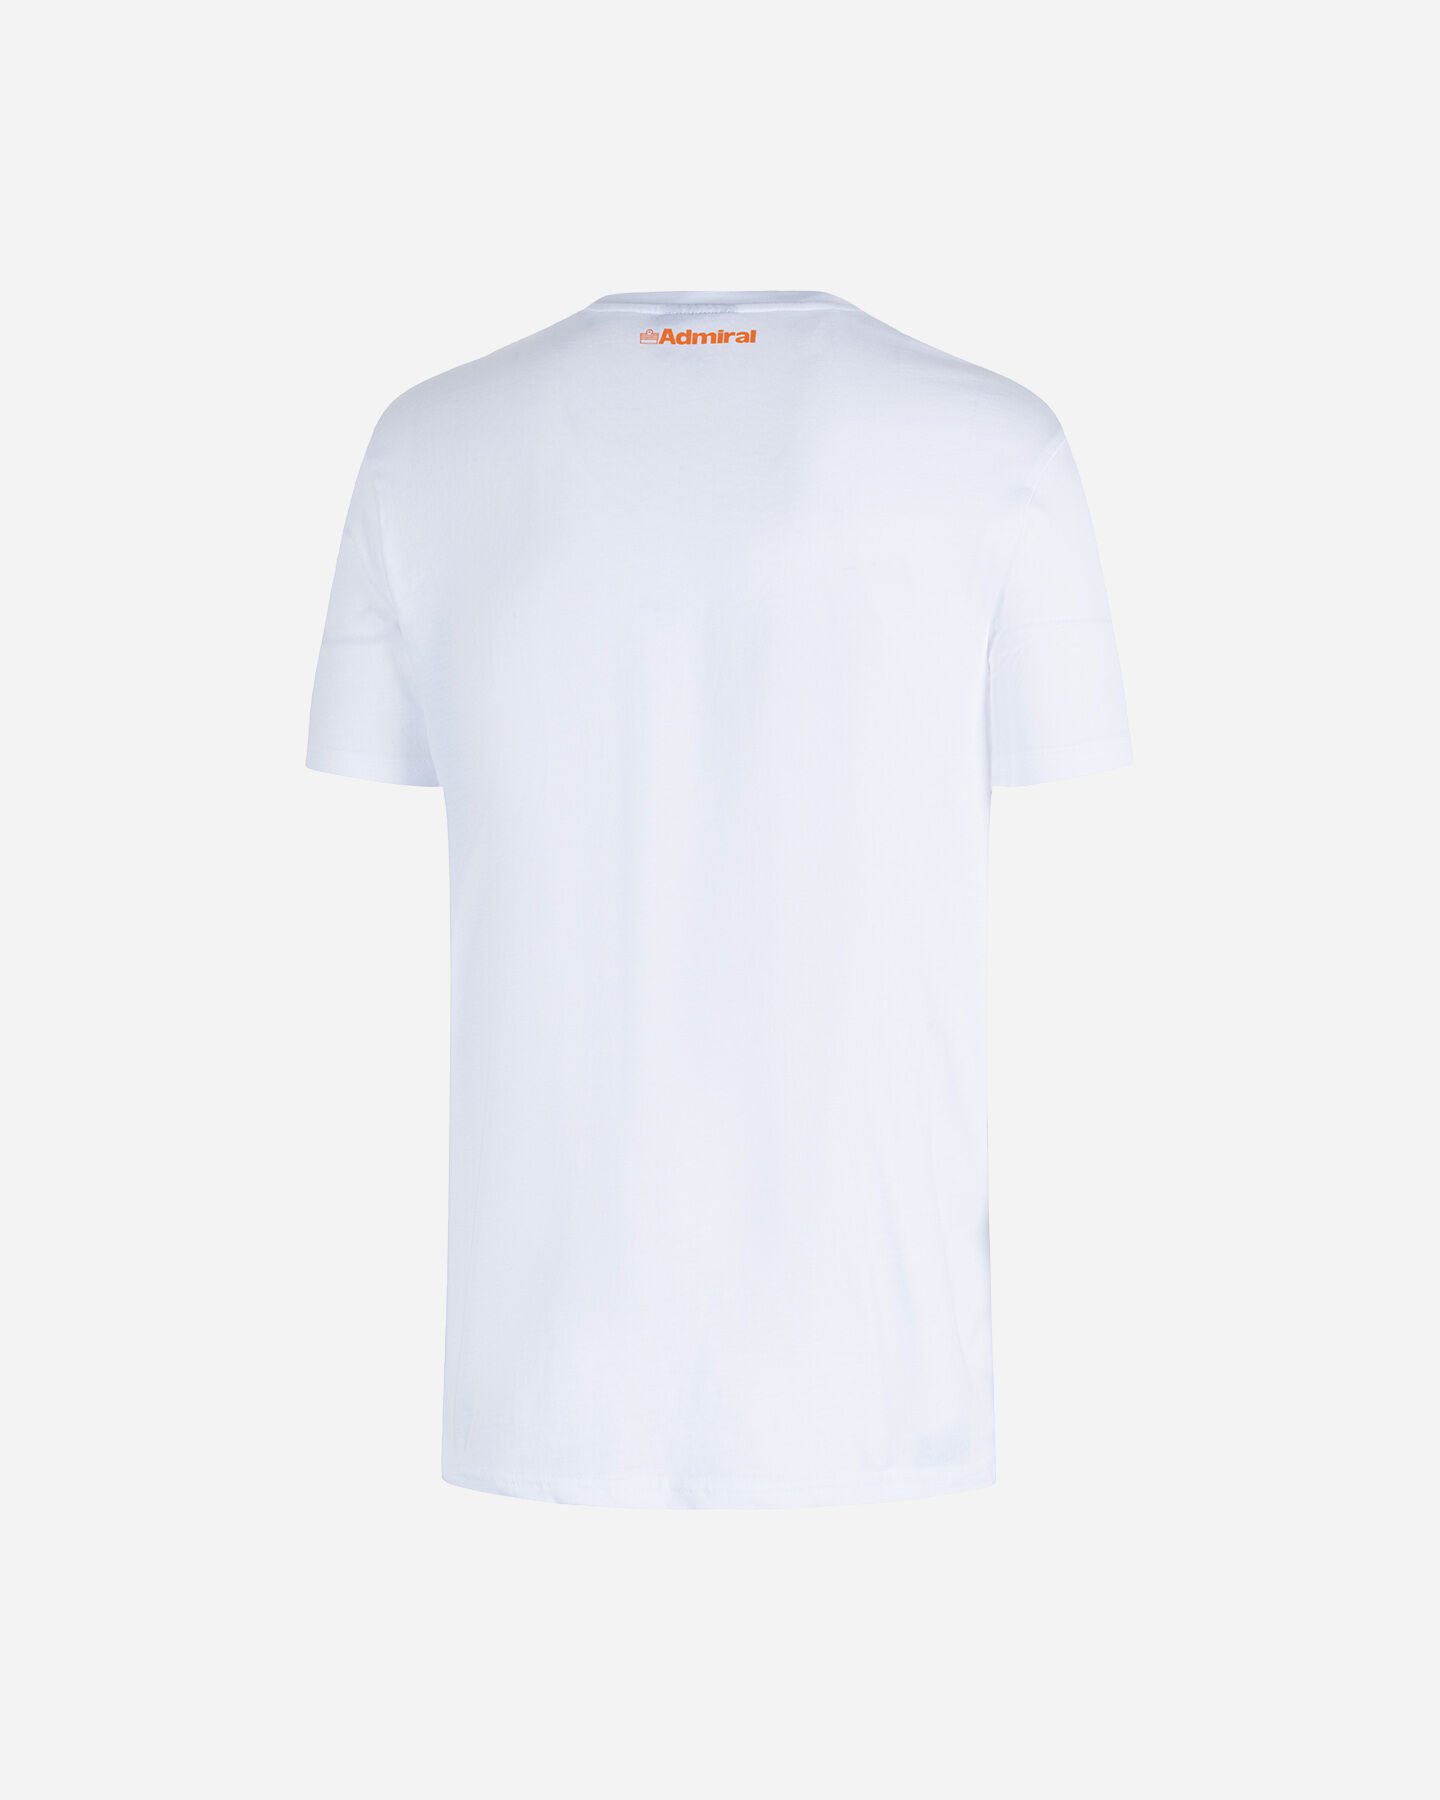  T-Shirt ADMIRAL RAINBOW LOGO M S4121676|001|M scatto 1